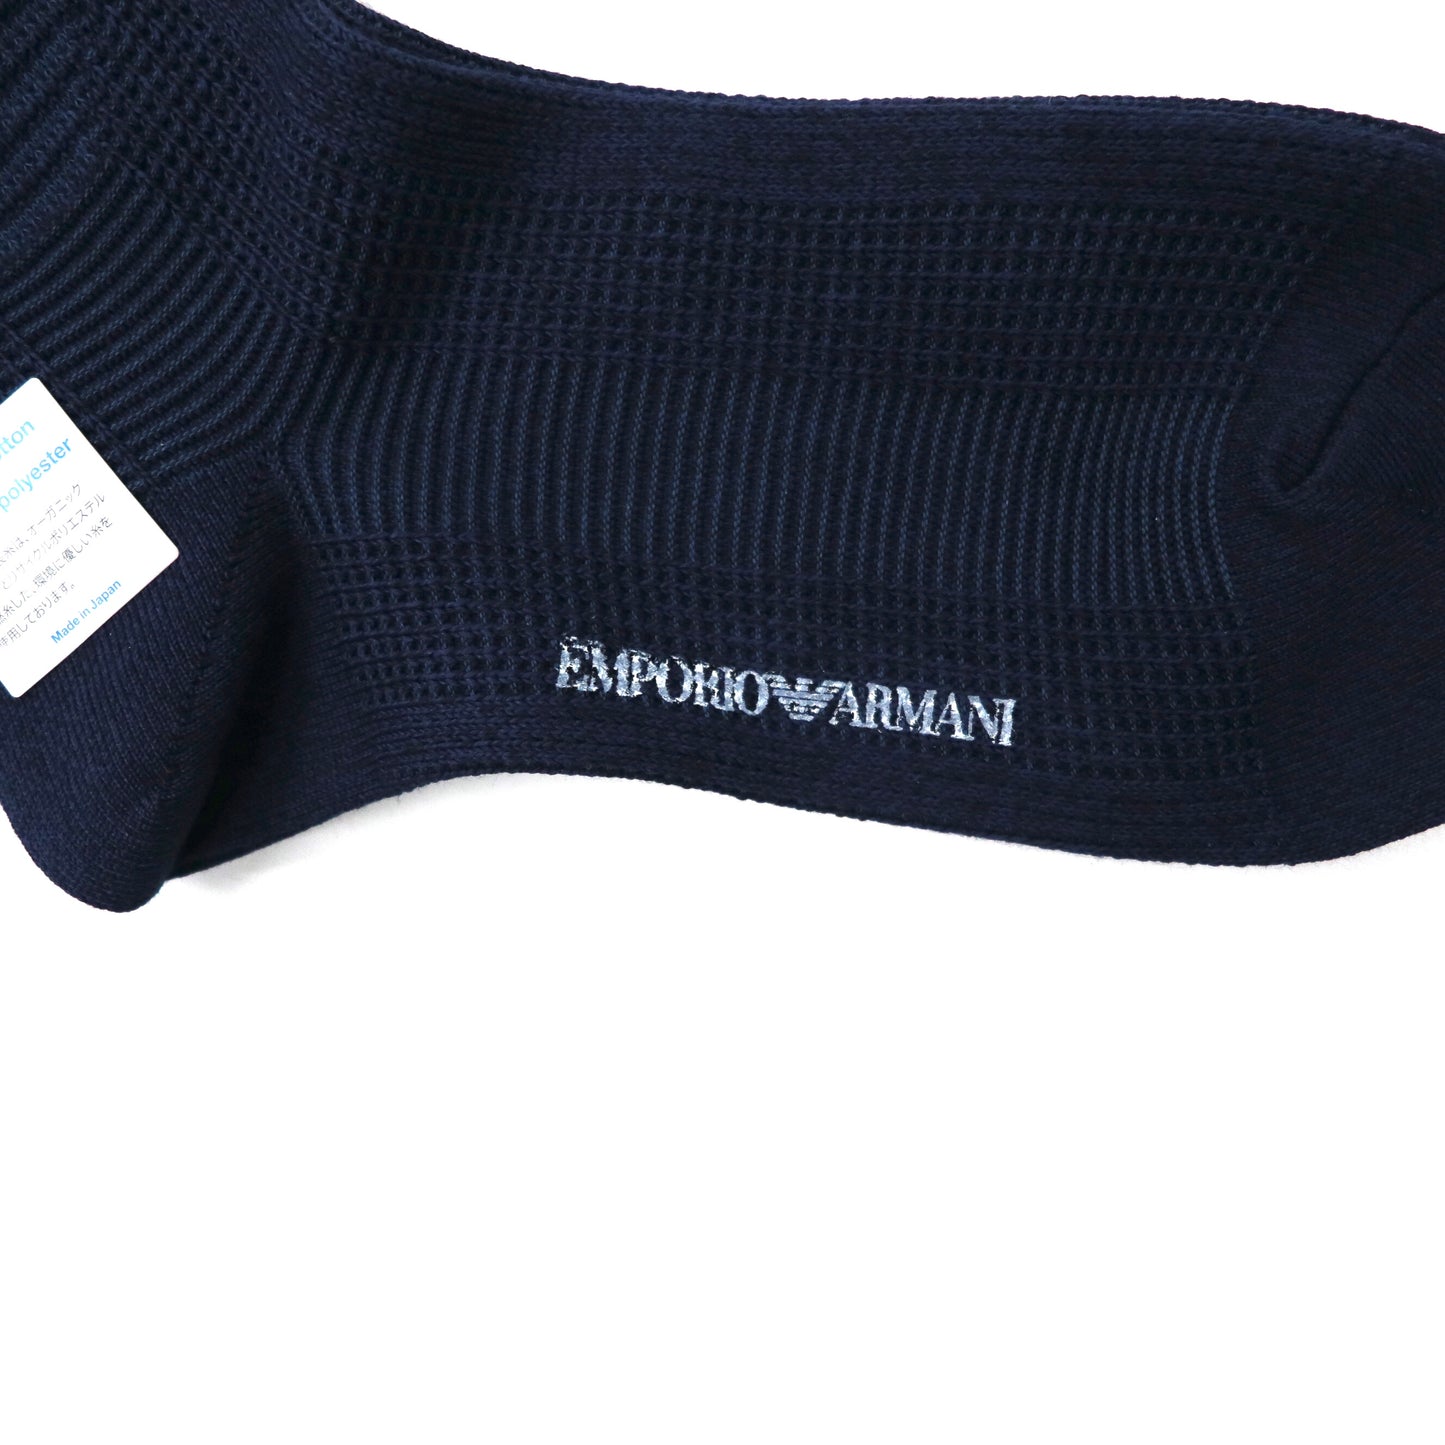 EMPORIO ARMANI 靴下 25-27cm ネイビー コットン 02319048 日本製 未使用品